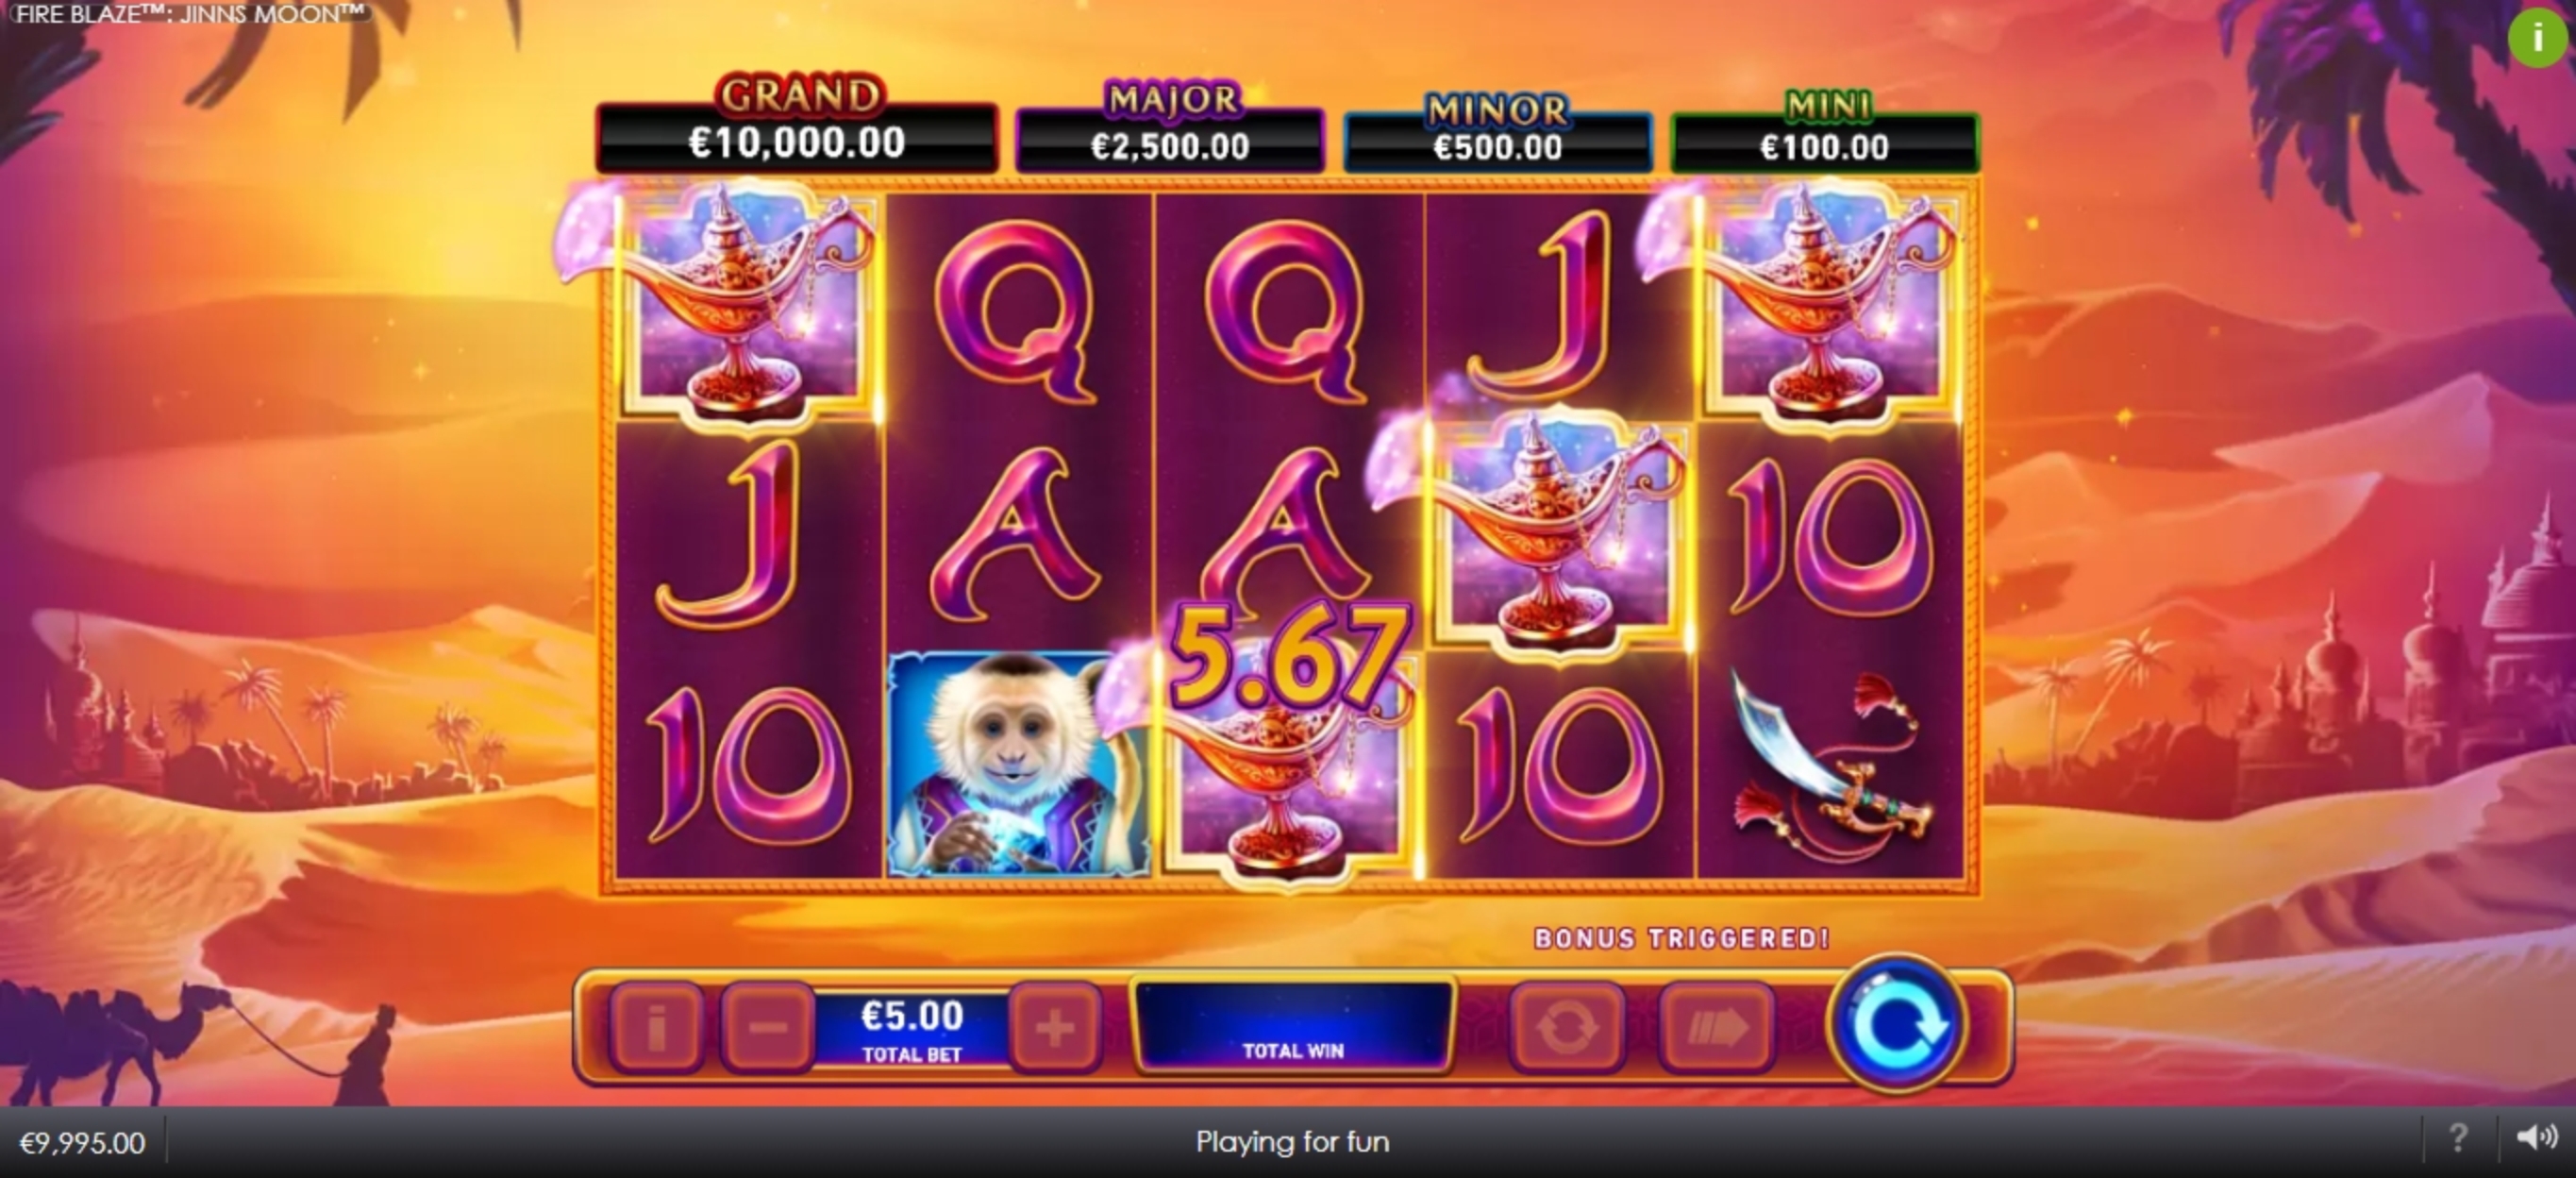 Win Money in Jinns Moon Free Slot Game by Rarestone Gaming